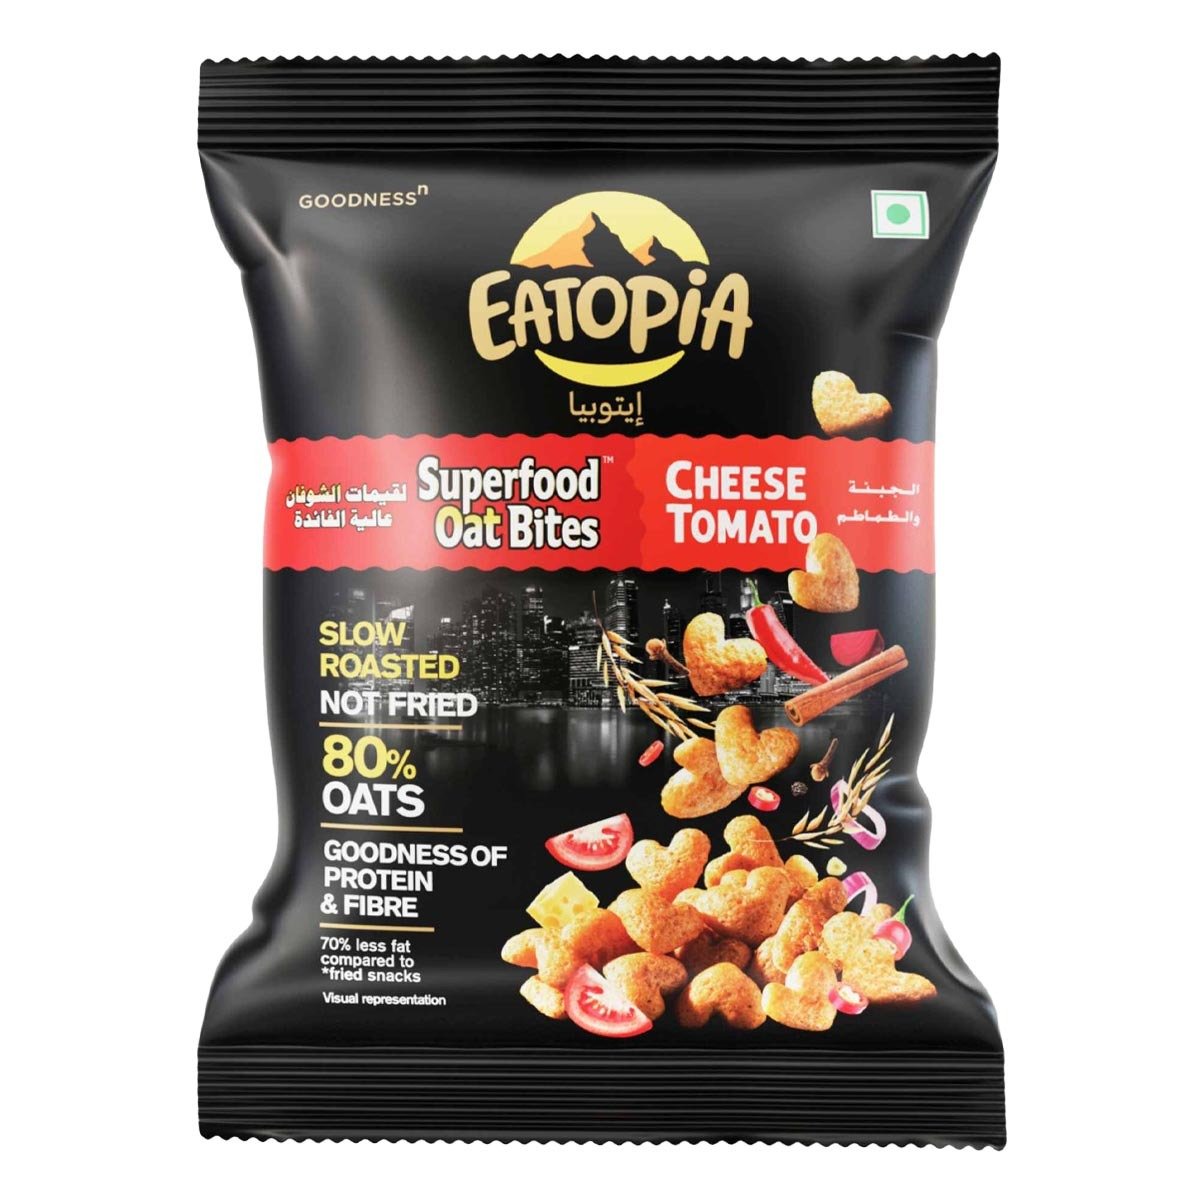 Eatopia Superfood Oat Bites Cheese Tomato 50 g